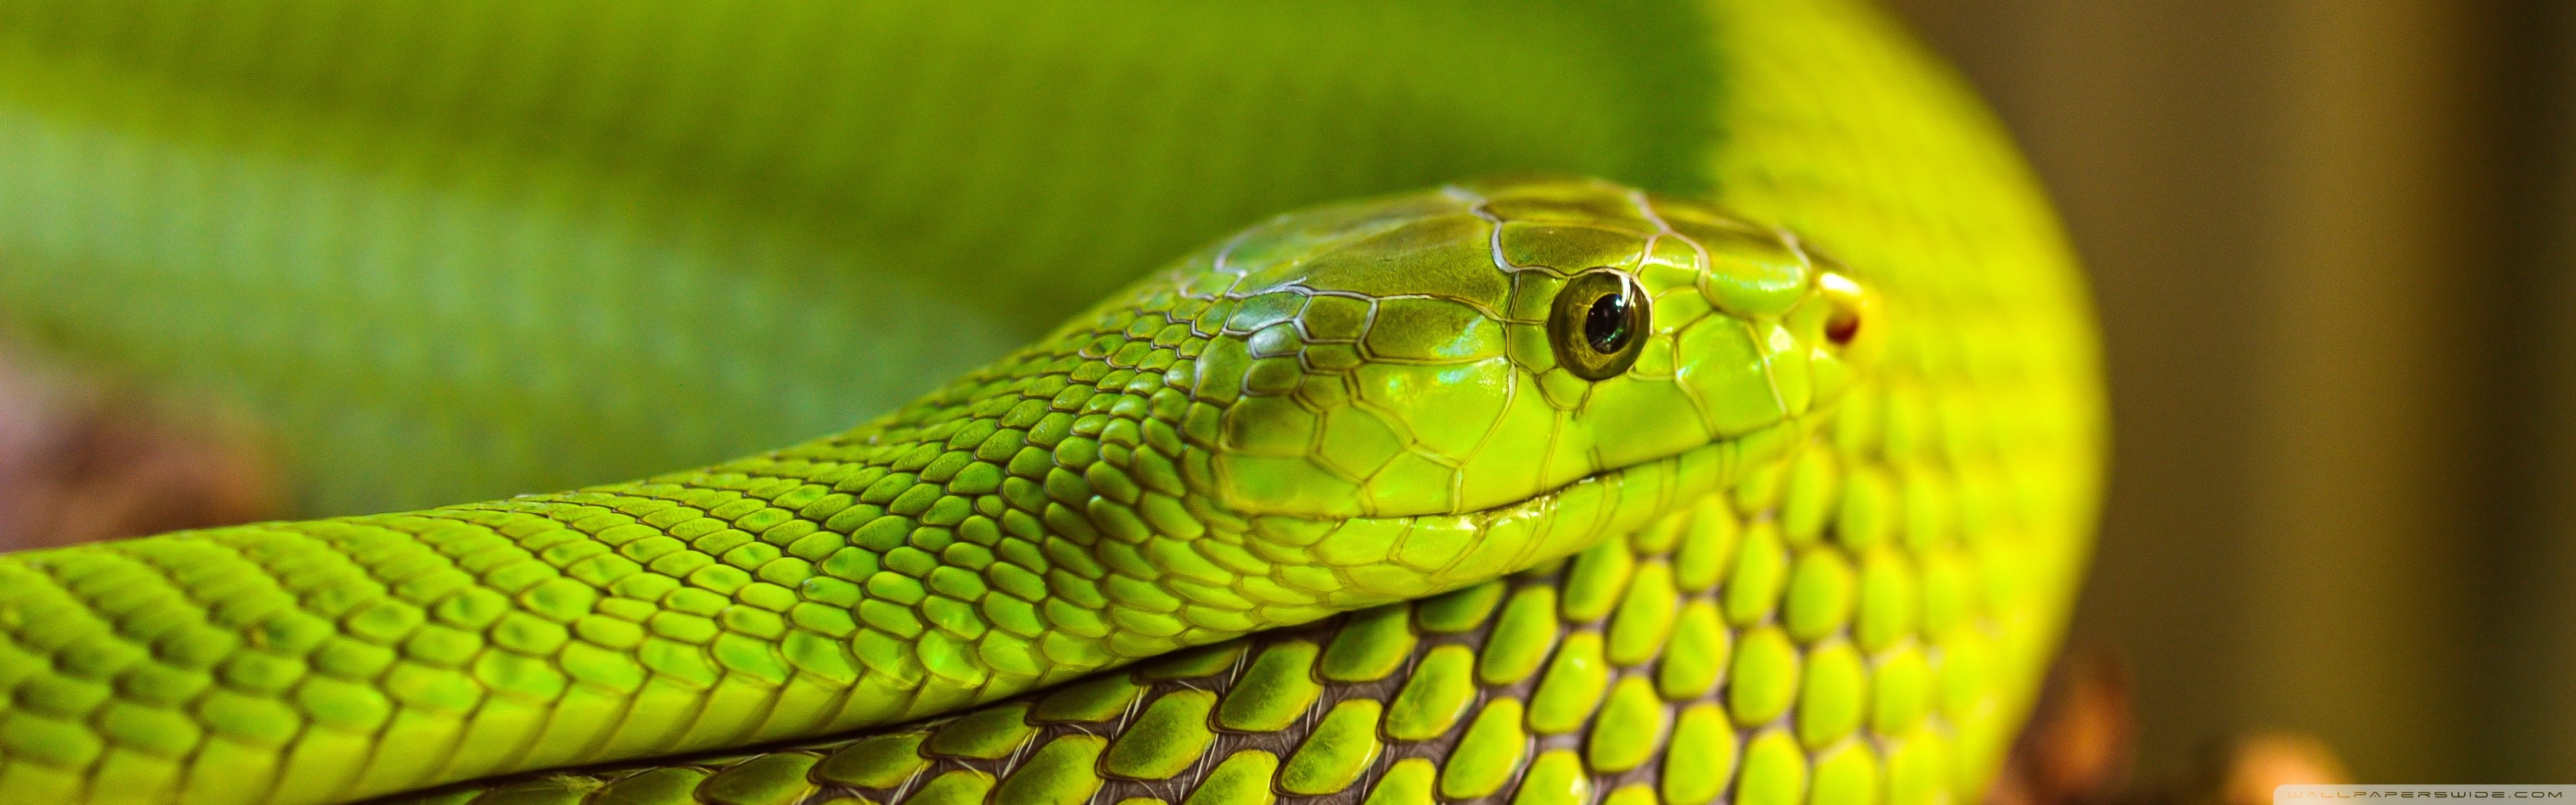 General 3360x1050 snake reptiles depth of field multiple display animals